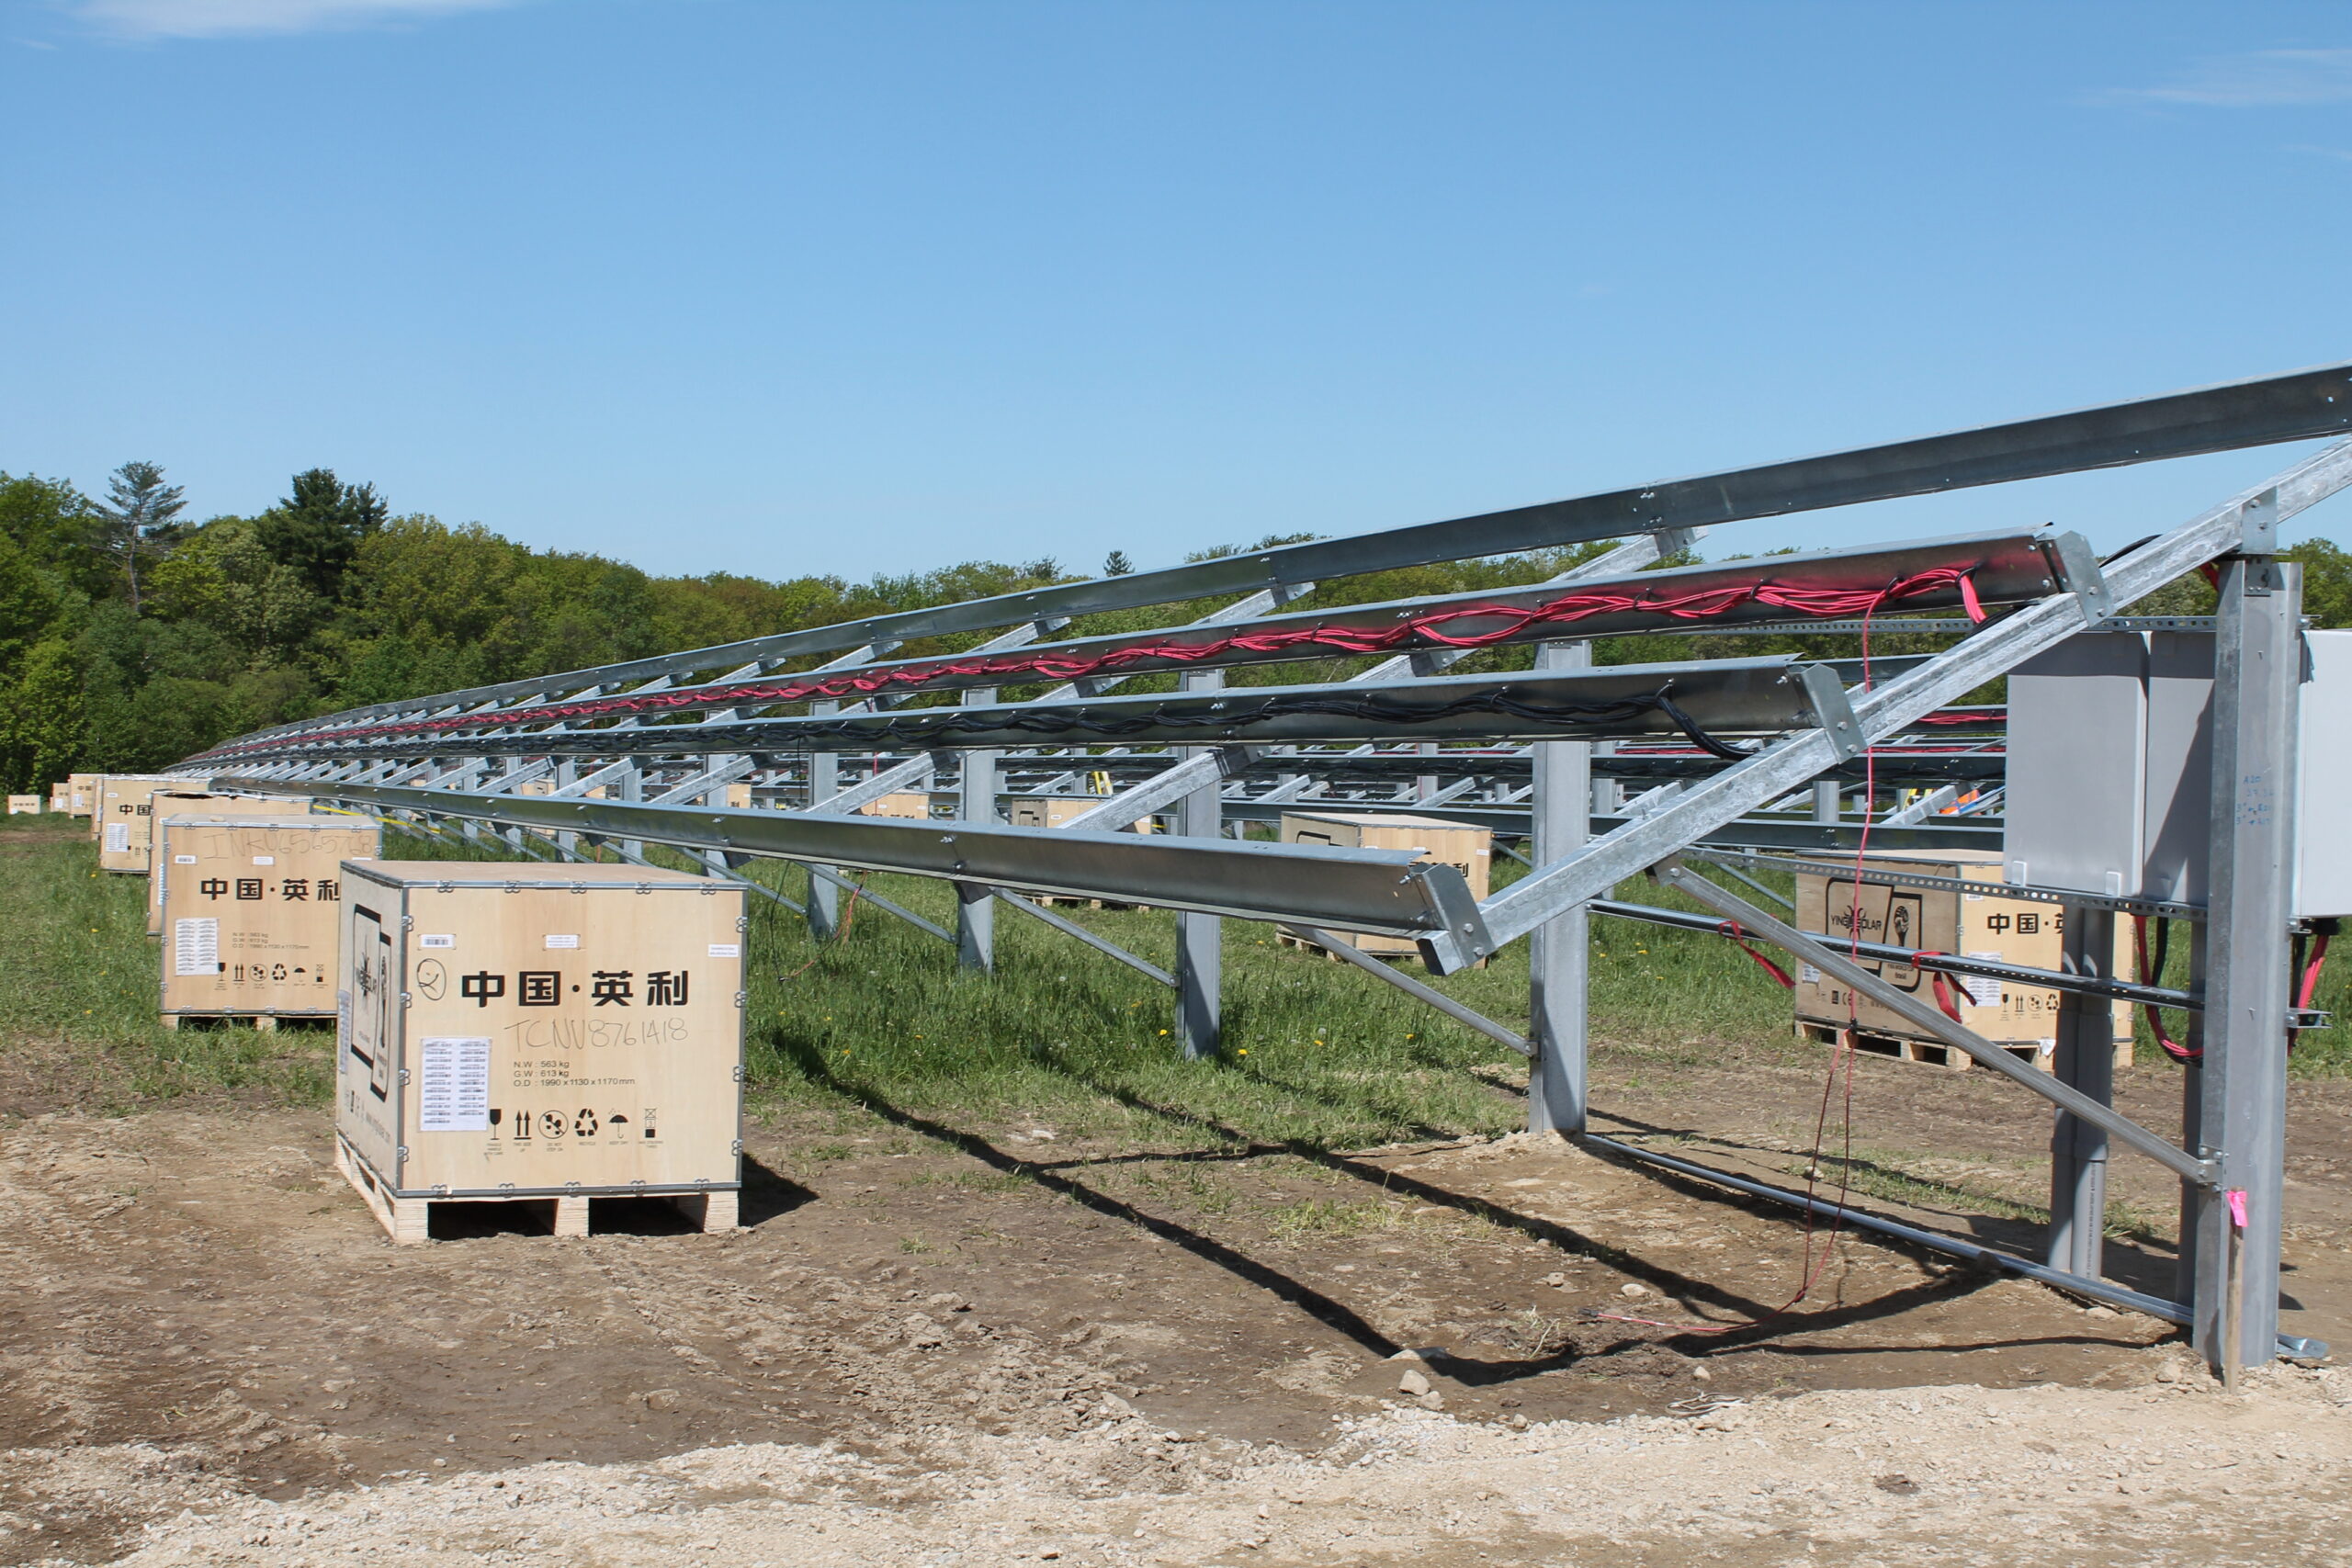 NORTHBRIDGE 2.6-MW SOLAR PROJECT